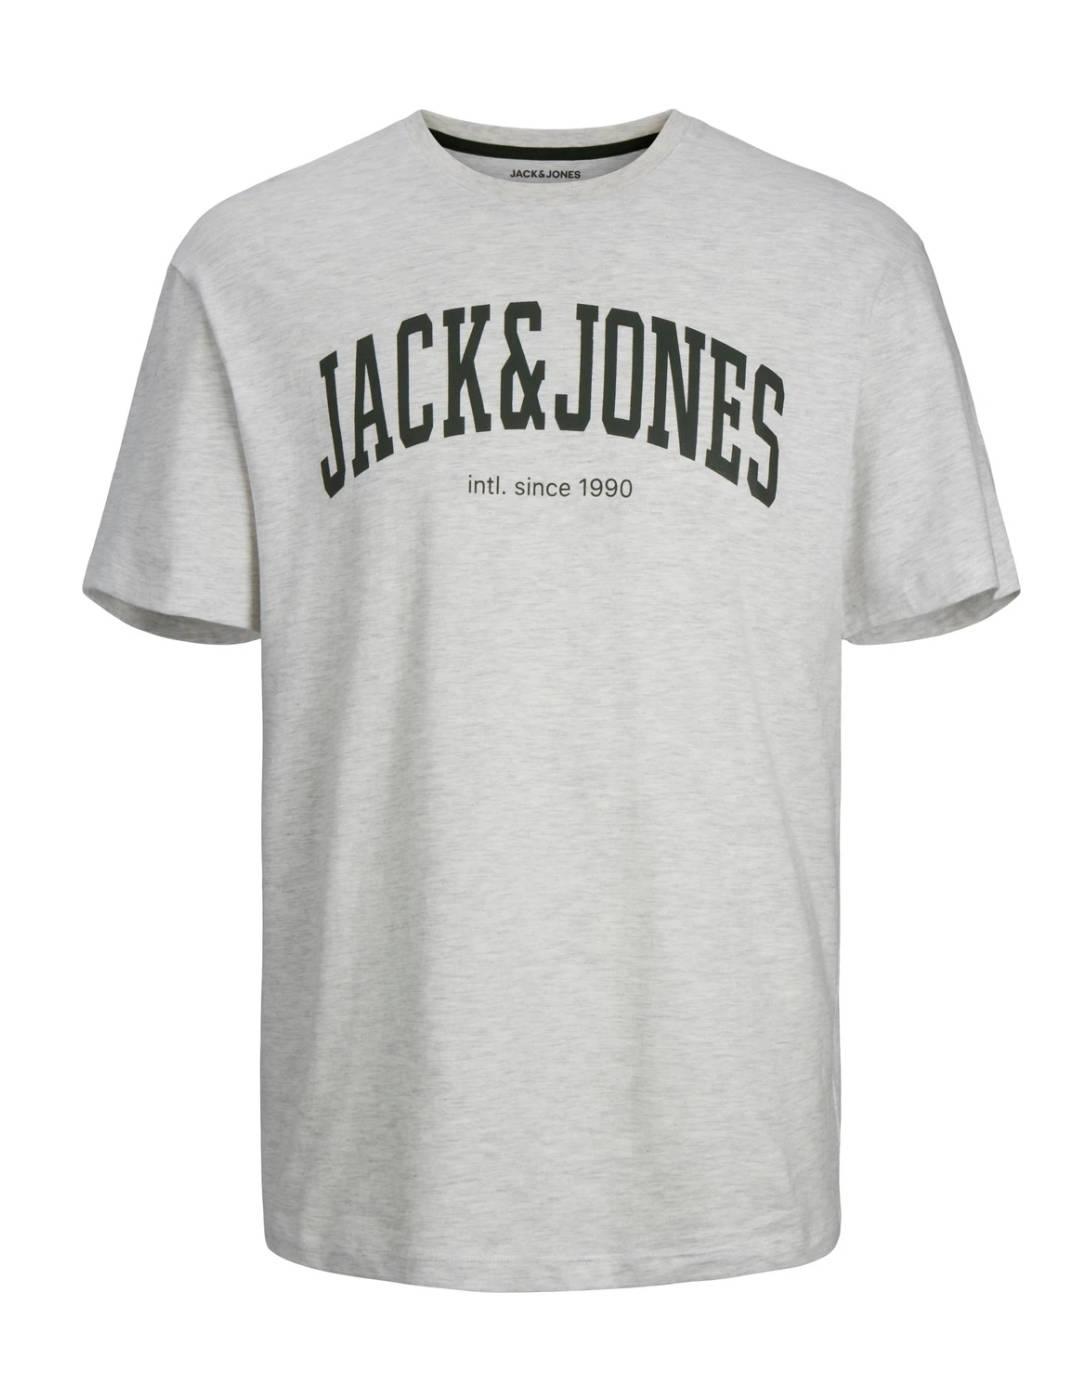 Camiseta Jack&Jones Josh gris de manga corta para hombre